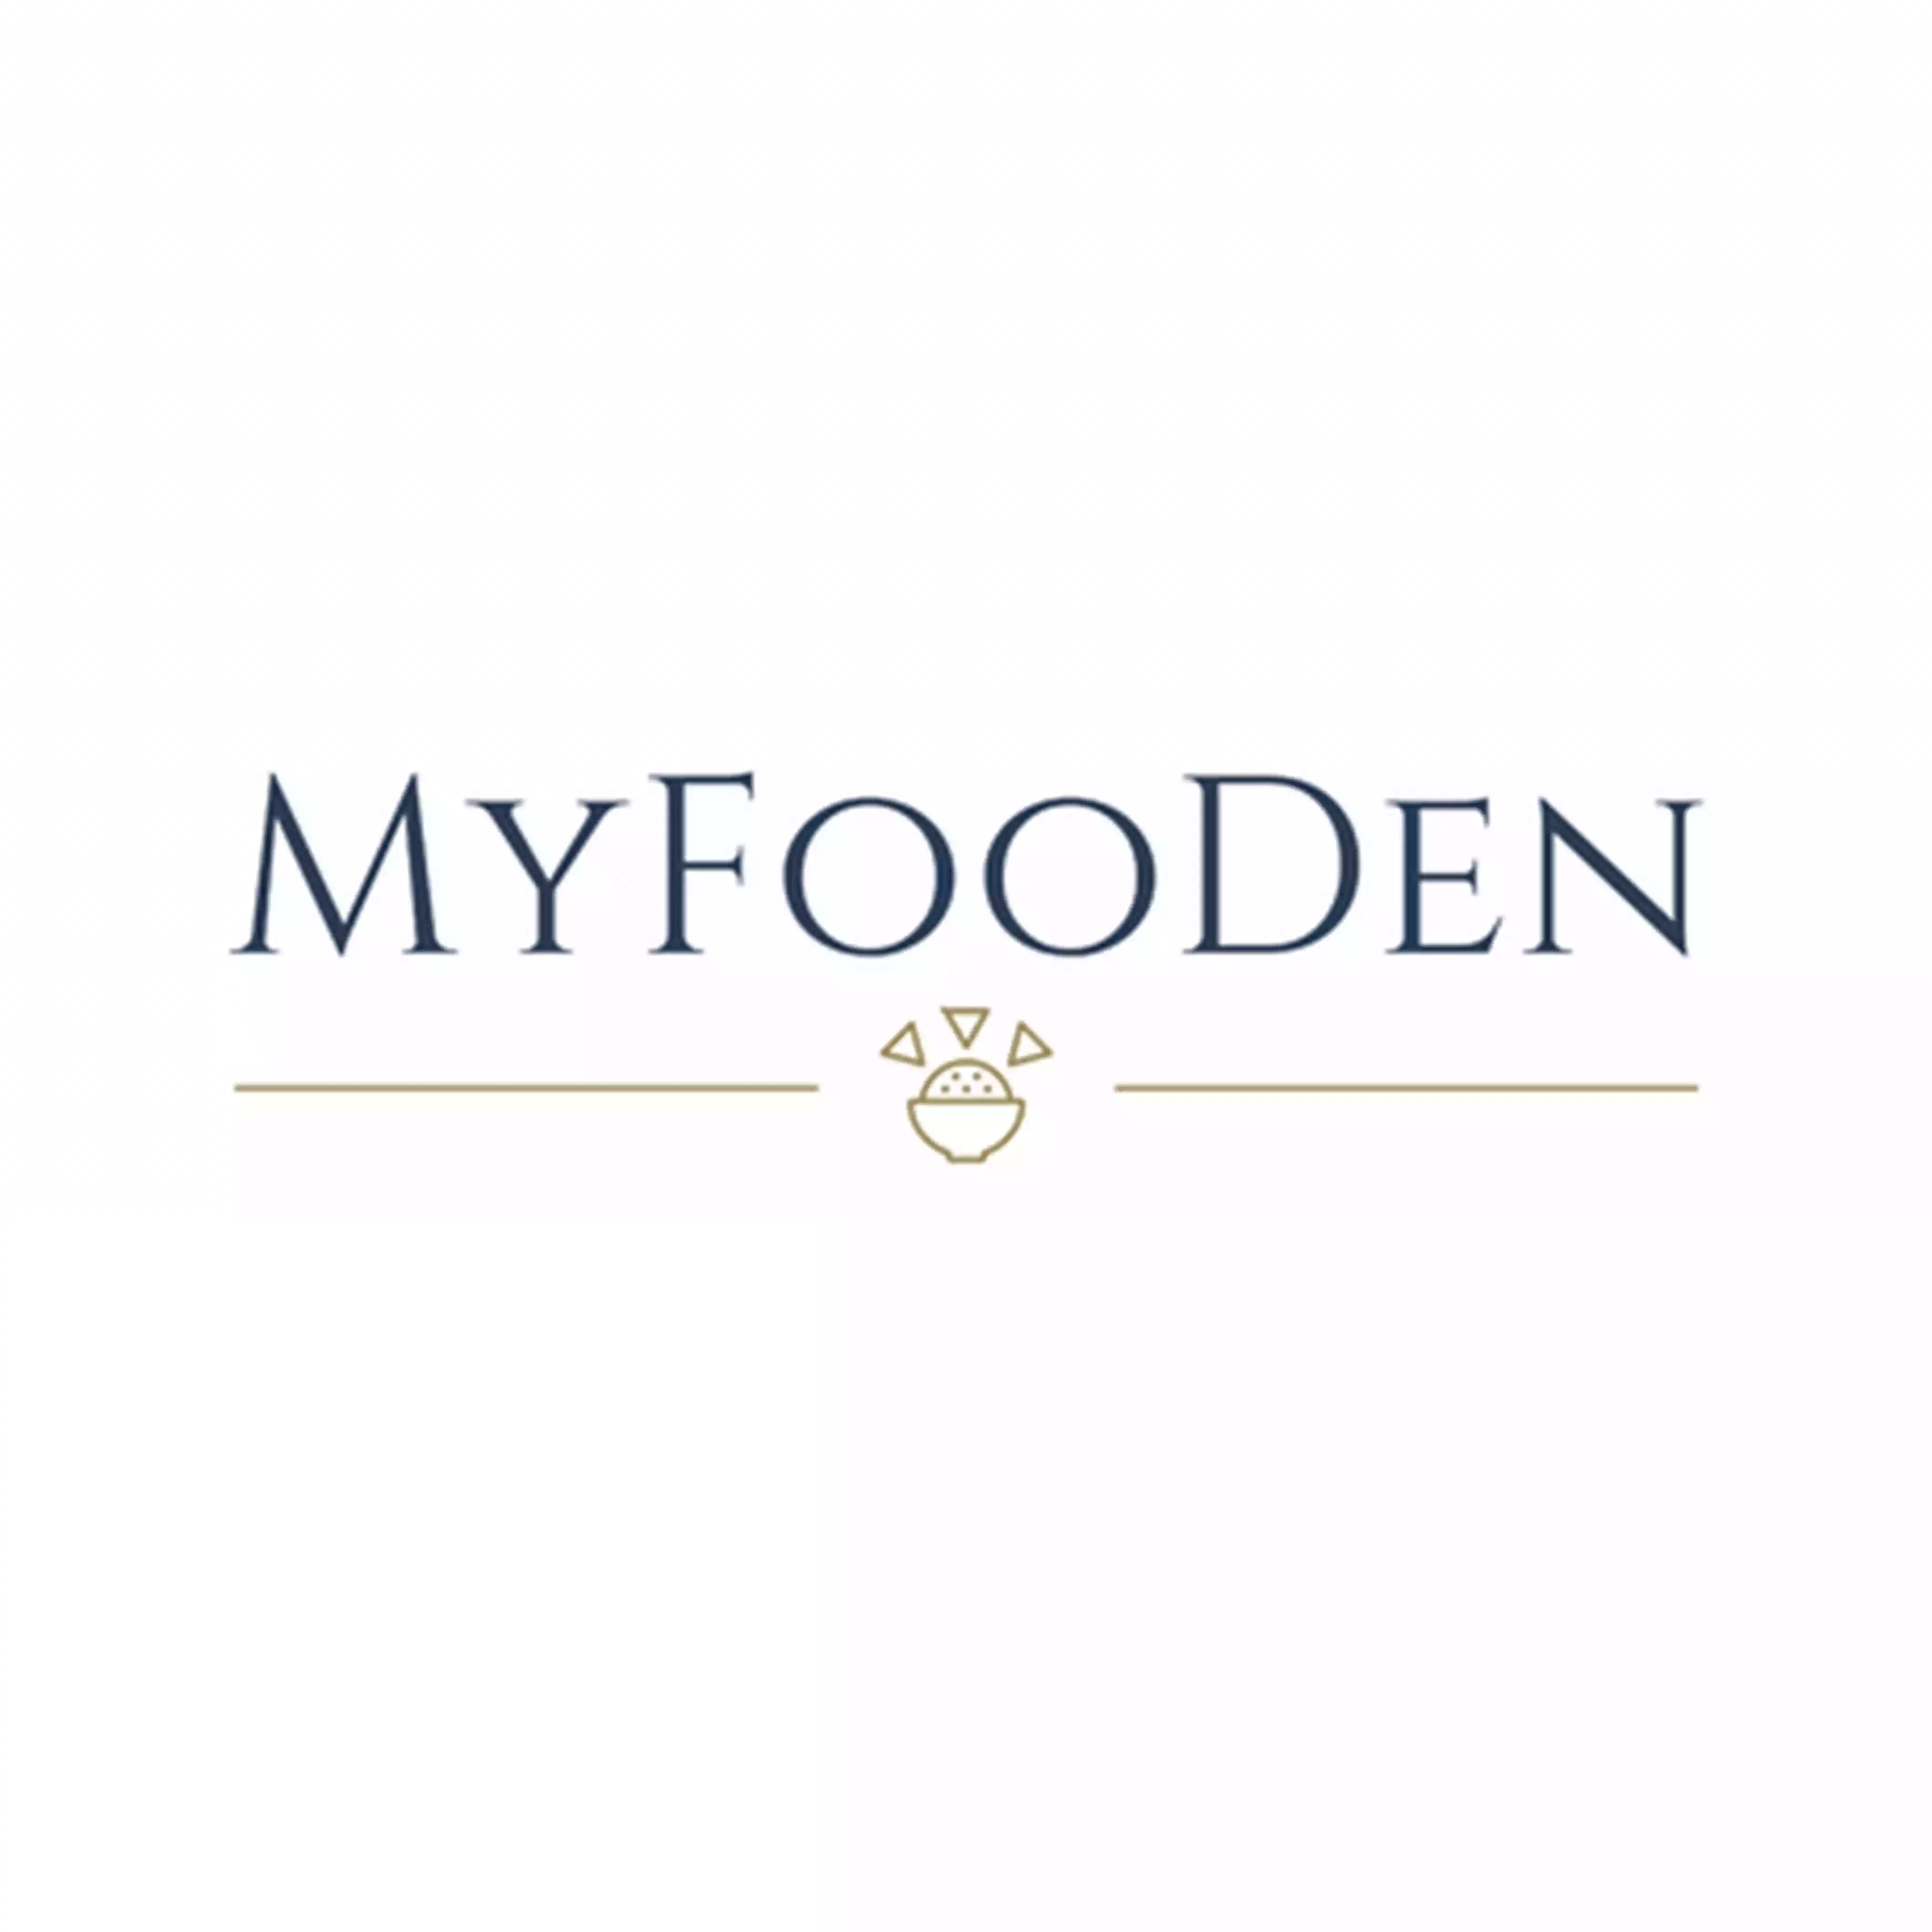 Shop Myfooden logo